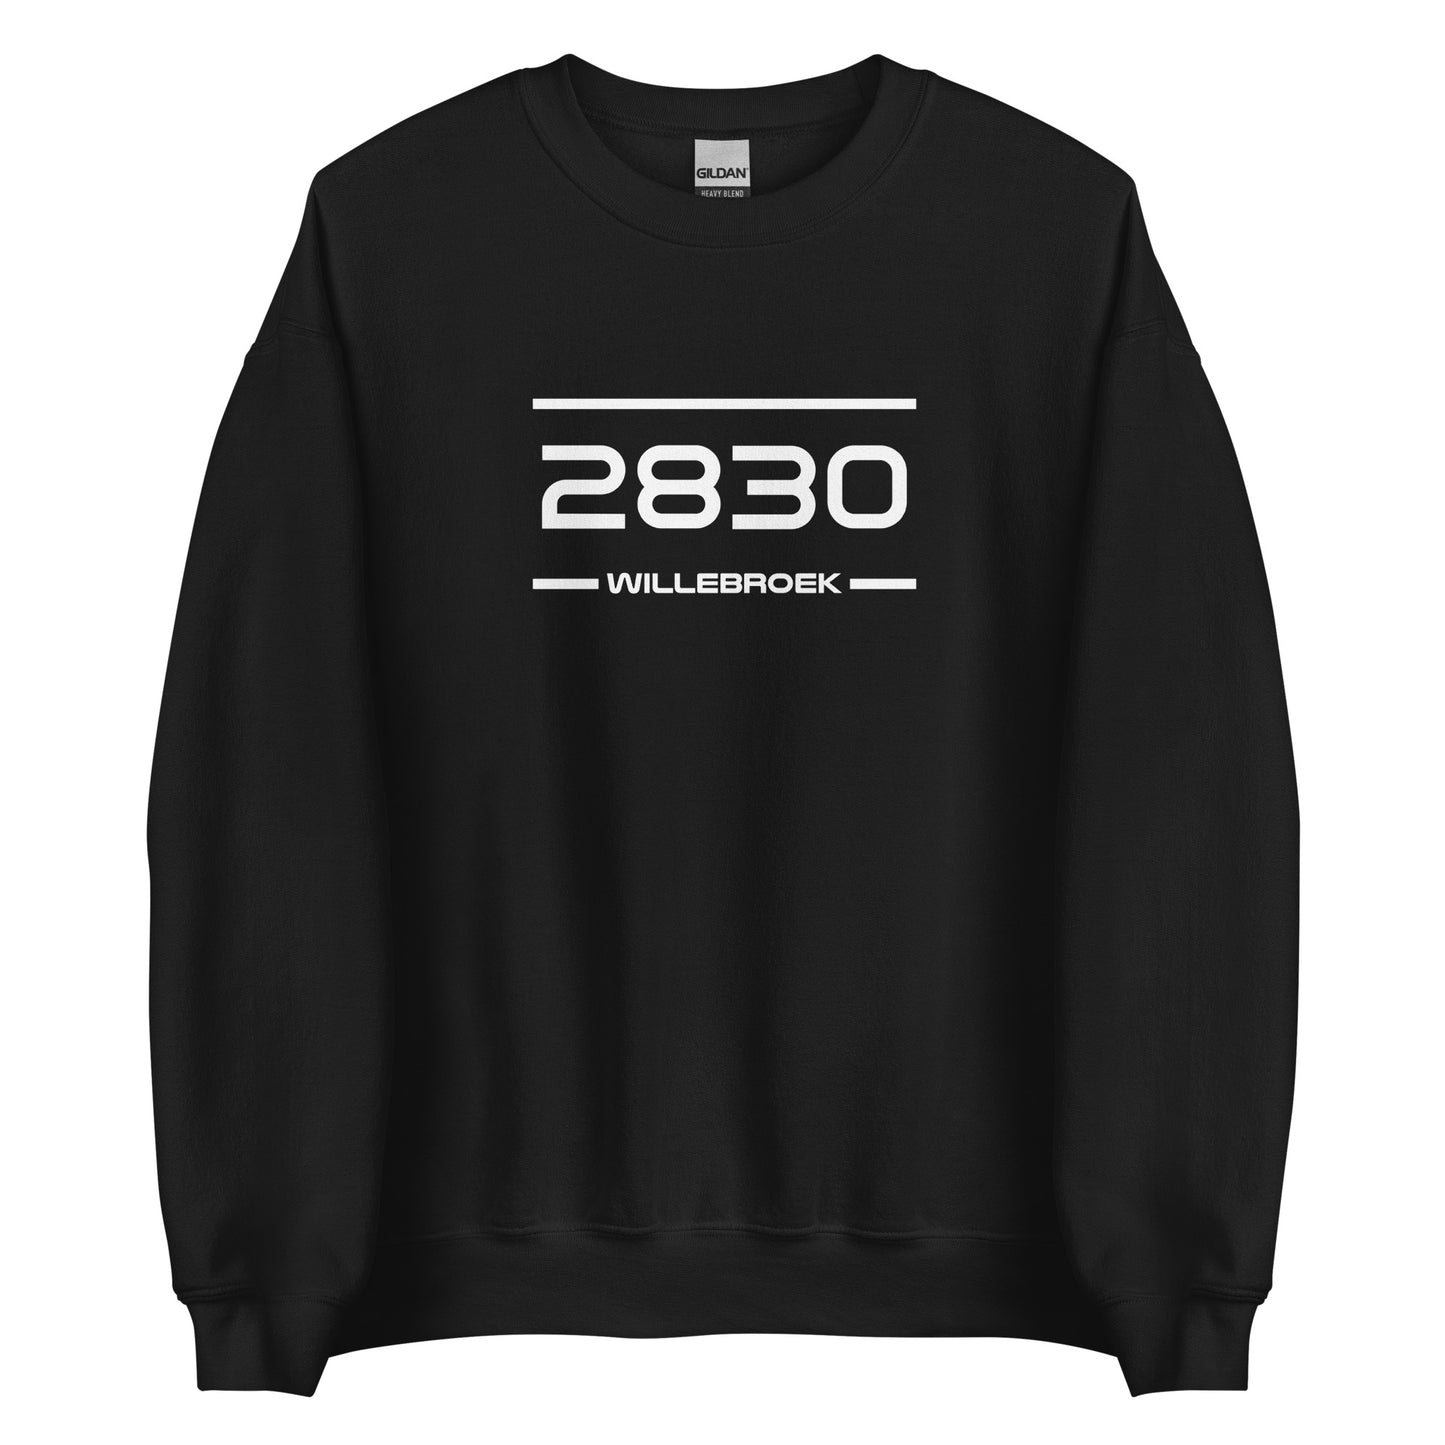 Sweater - 2830 - Willebroek (M/V)